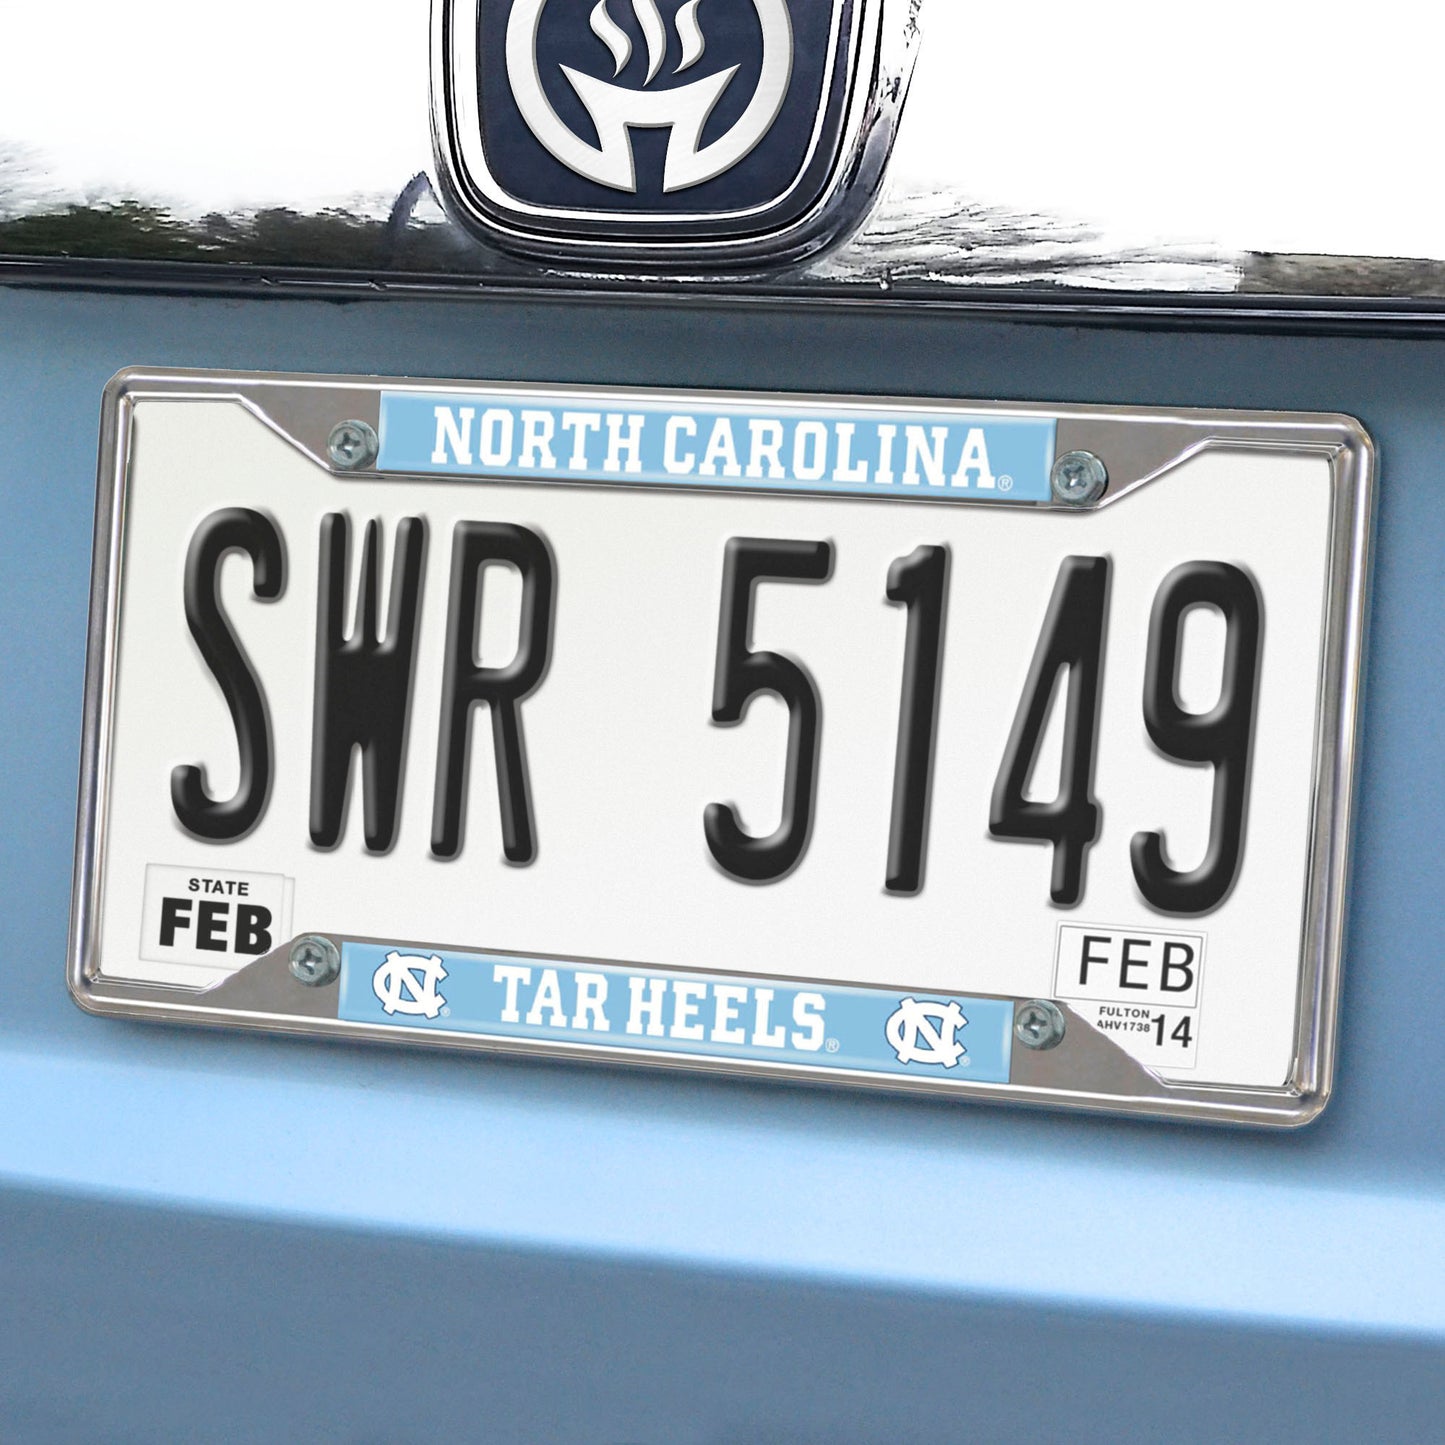 North Carolina Tar Heels License Plate Frame with NC Logo & Wordmark by Fanmats